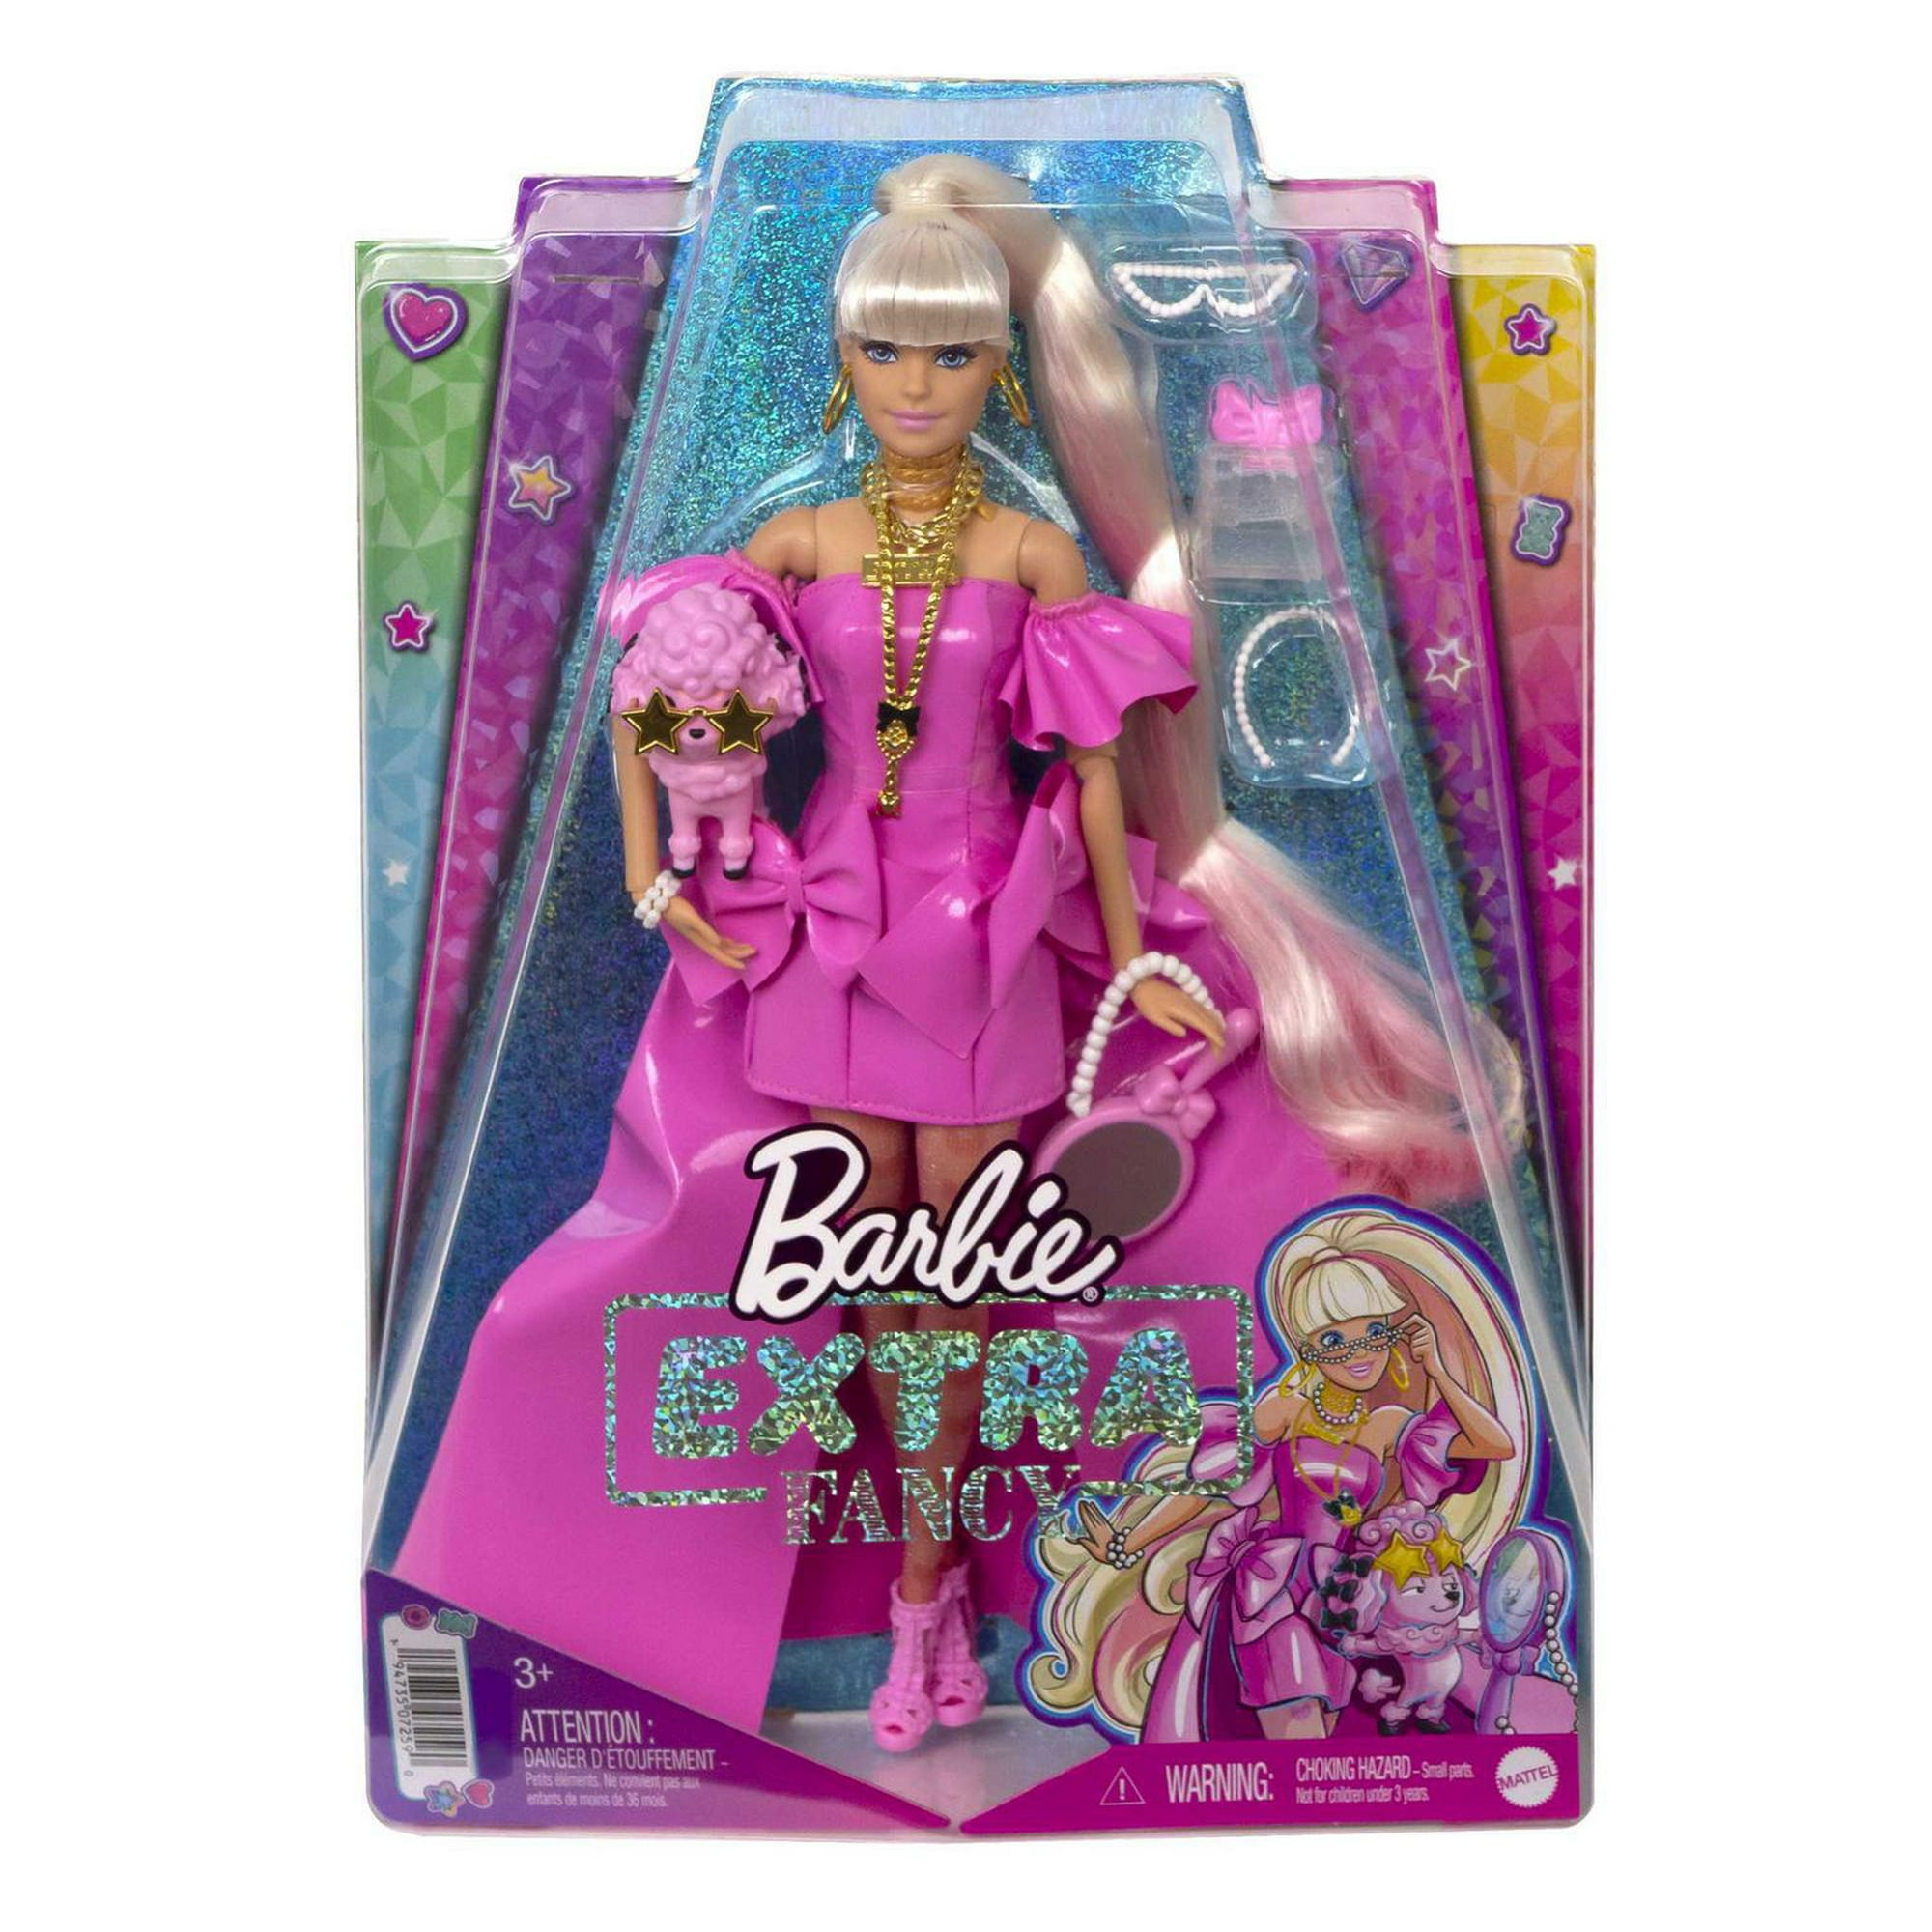 Barbie Pink Wind up Miniature Tumbling Washing Machine. Mattel 